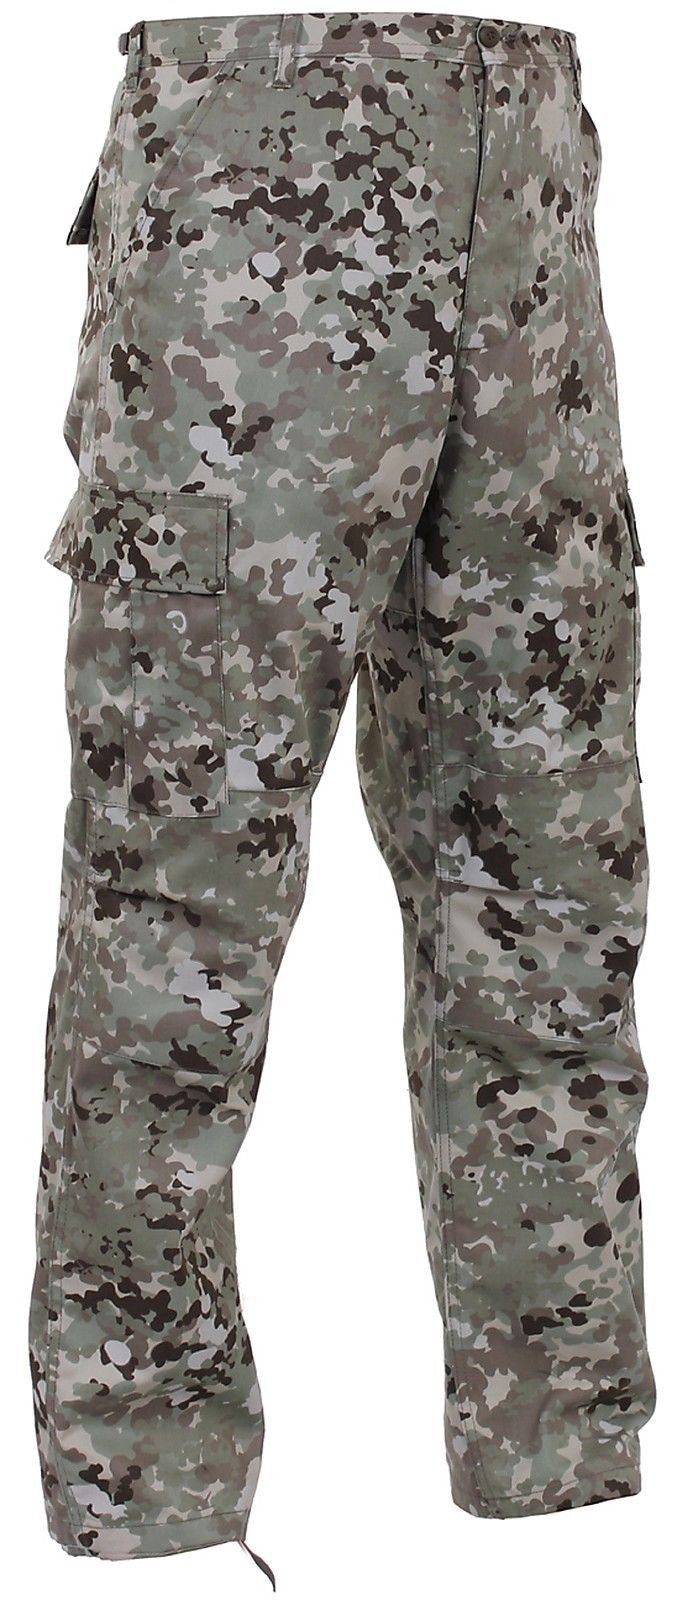 Men's Total Terrain Camo BDU Cargo Pants - Military Style Tactical Pan ...